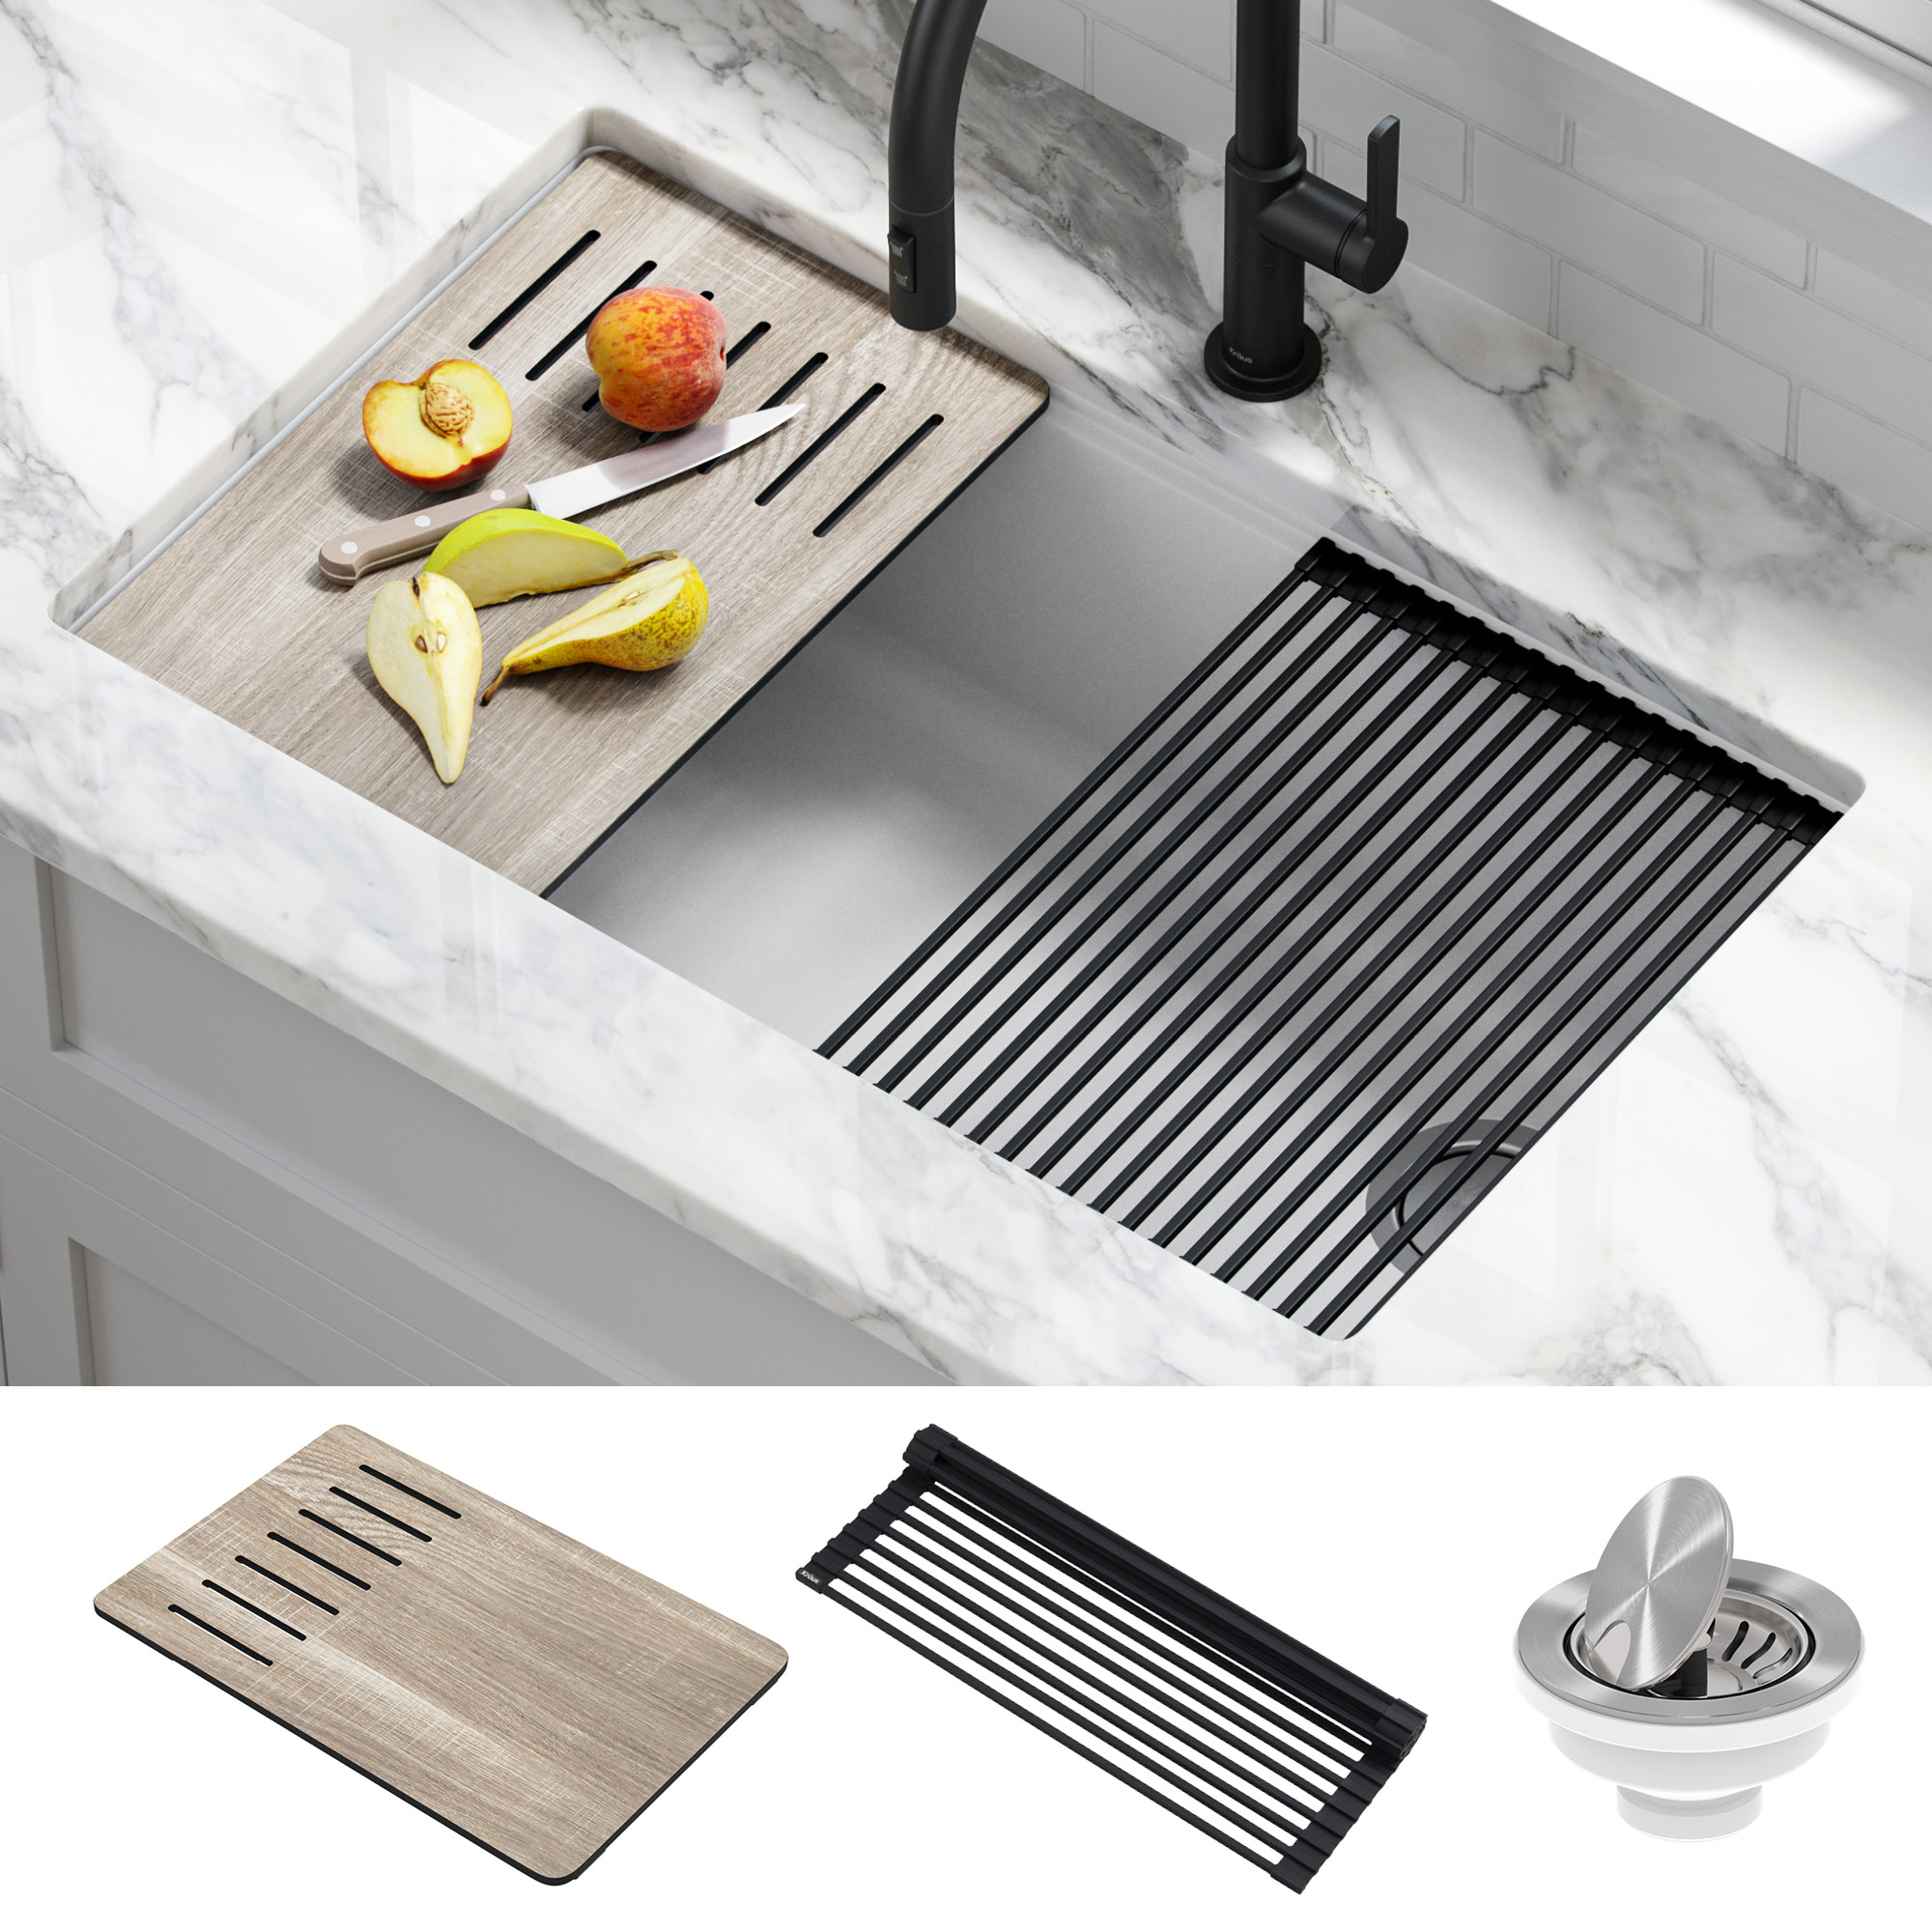 KRAUS Bellucci Workstation 33 inch Undermount Granite Composite Single Bowl Kitchen Sink in White with Accessories - image 2 of 21